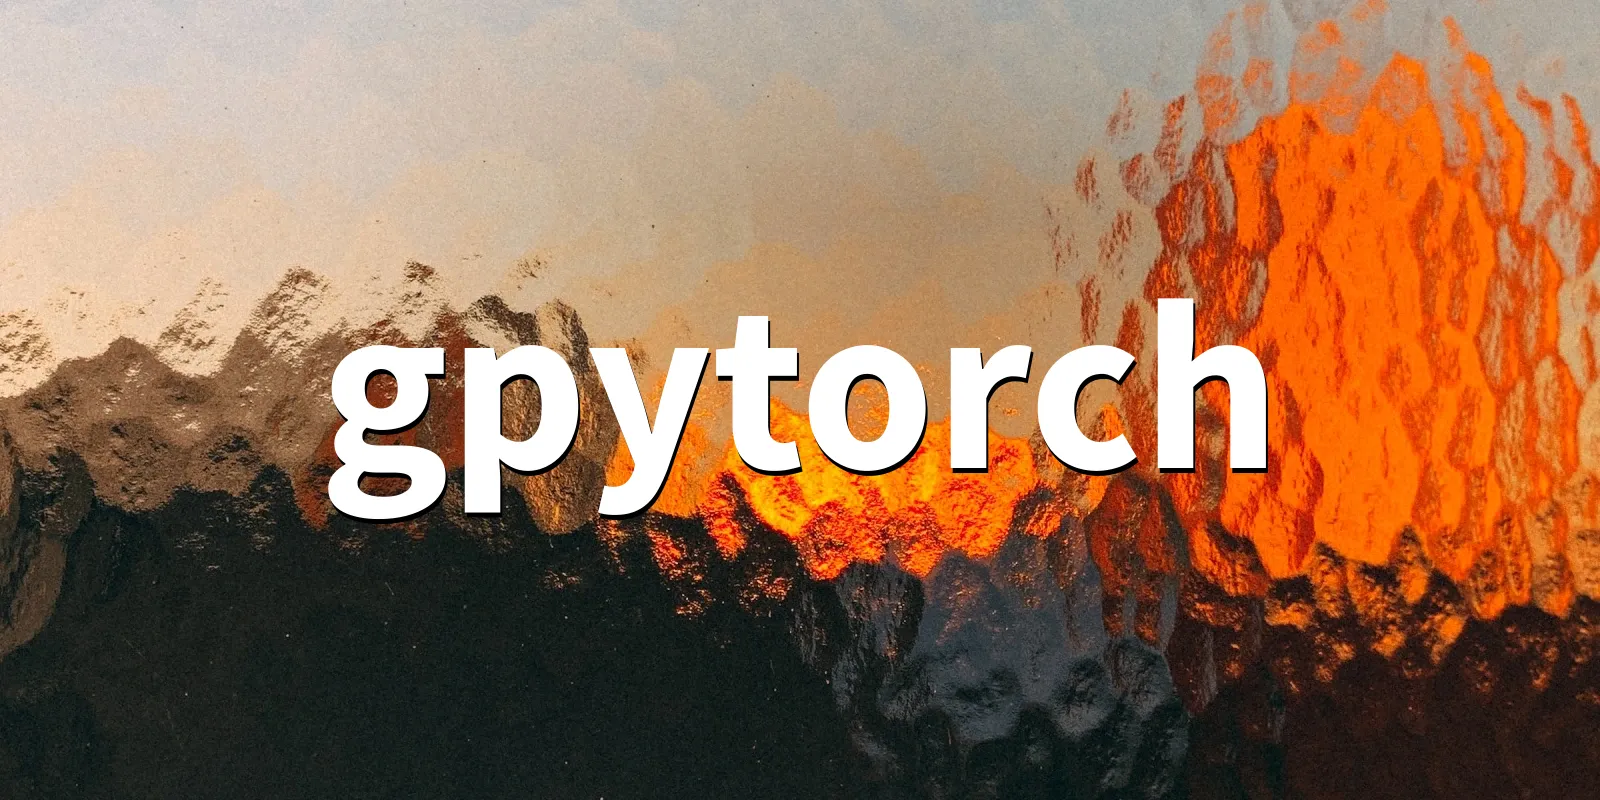 /pkg/g/gpytorch/gpytorch-banner.webp